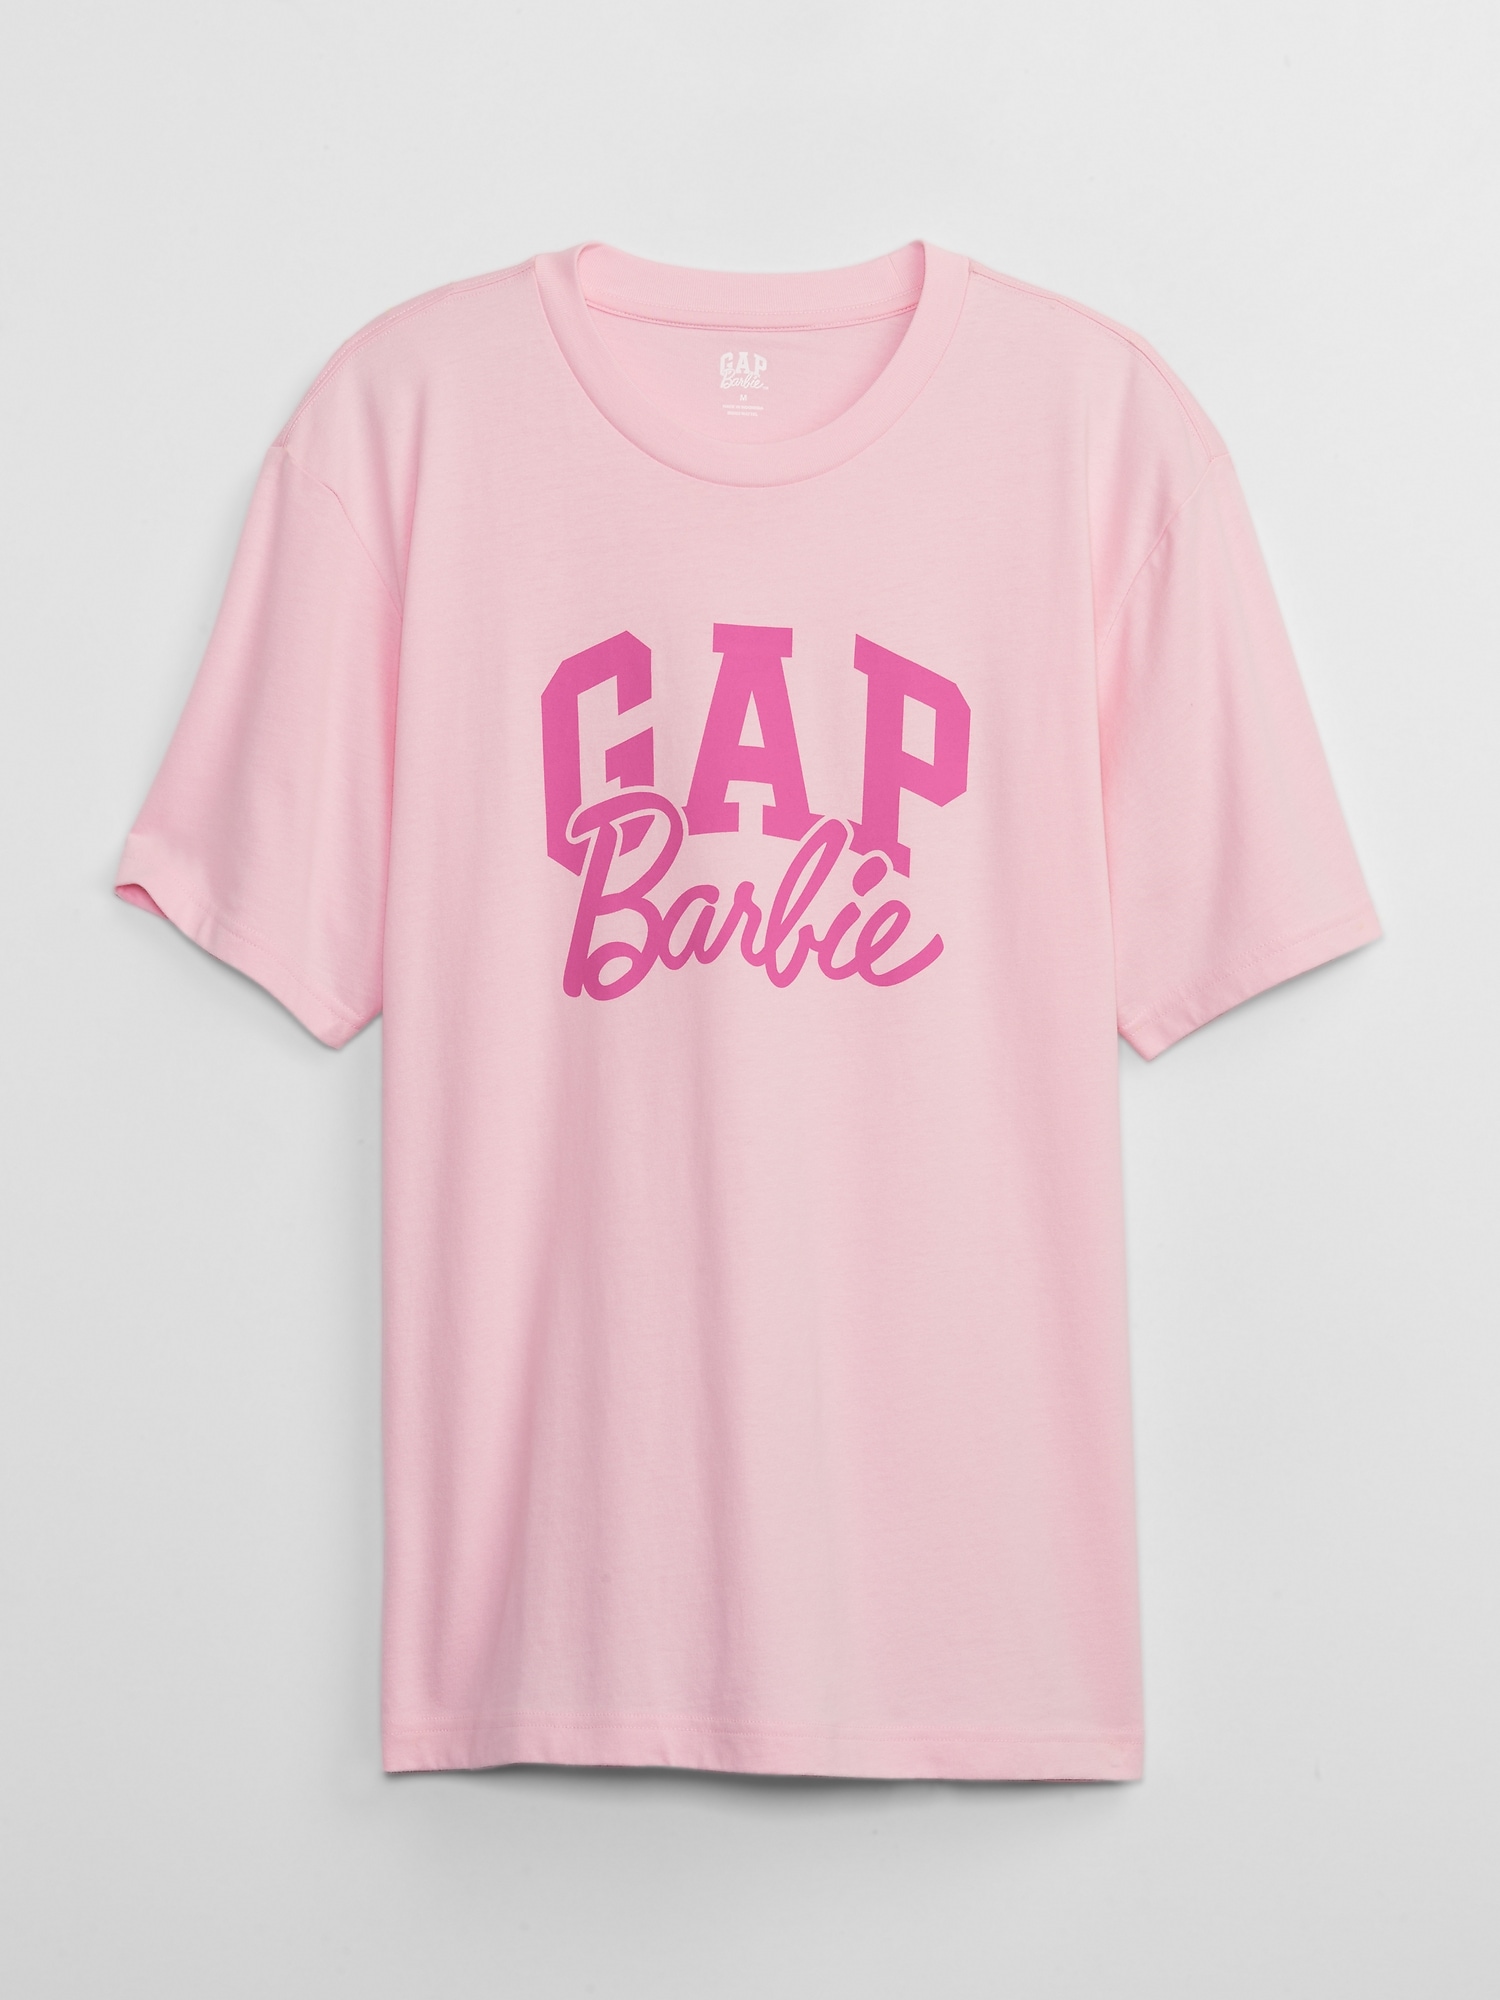 Barbie Womens Short Sleeve T-Shirt, Ladies Malibu Off Campus White Graphic  Tee, Retro Fashion Top